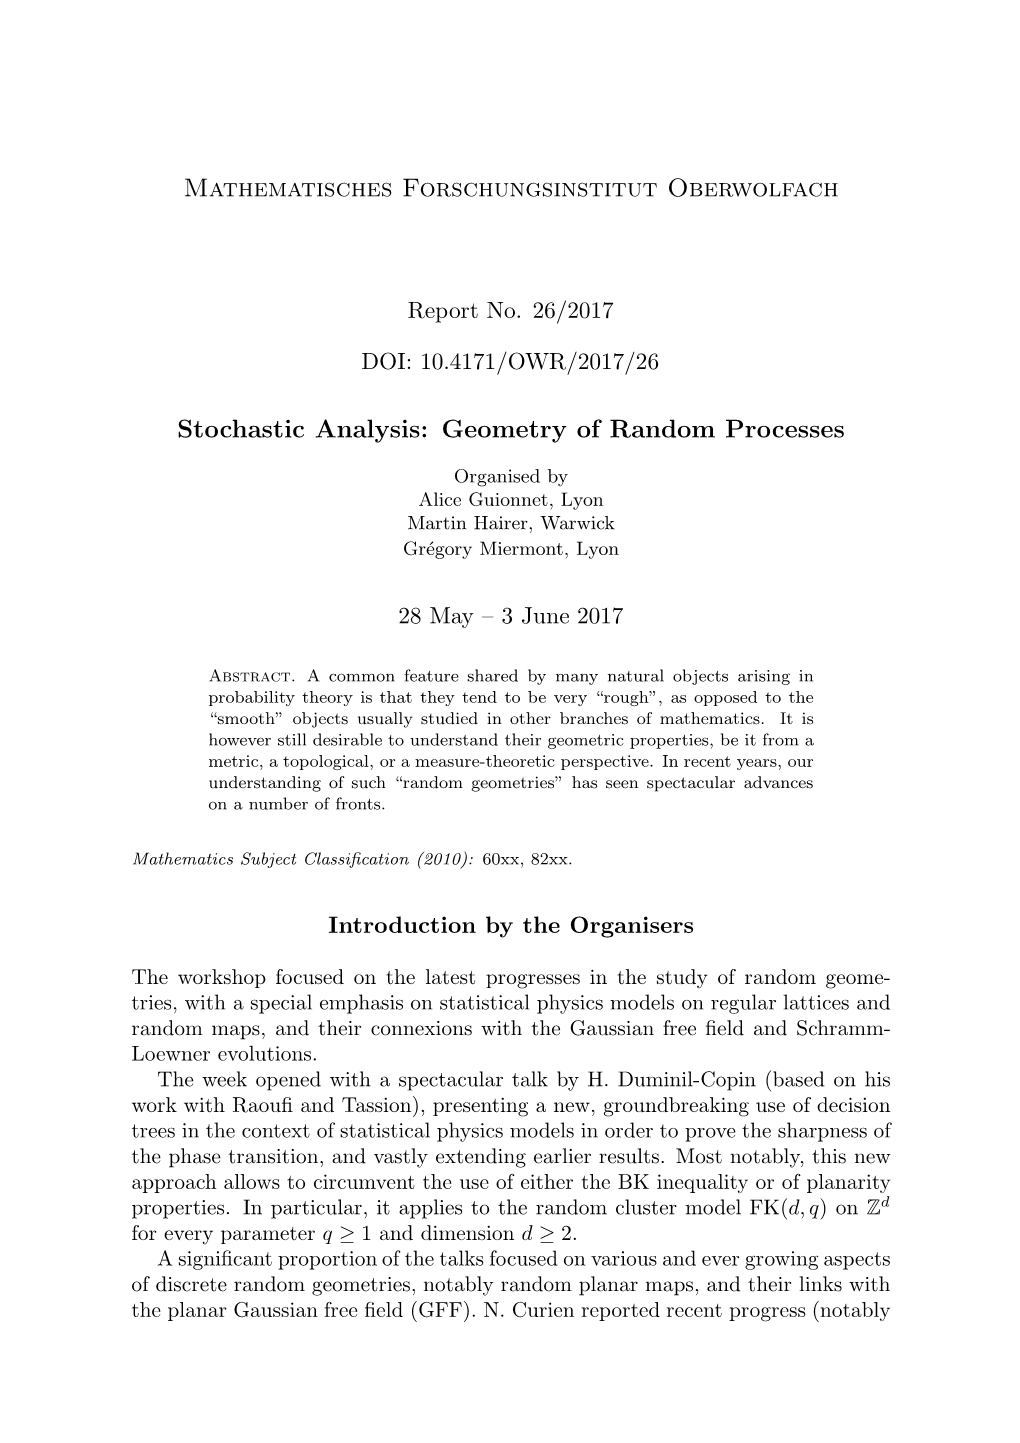 Stochastic Analysis: Geometry of Random Processes